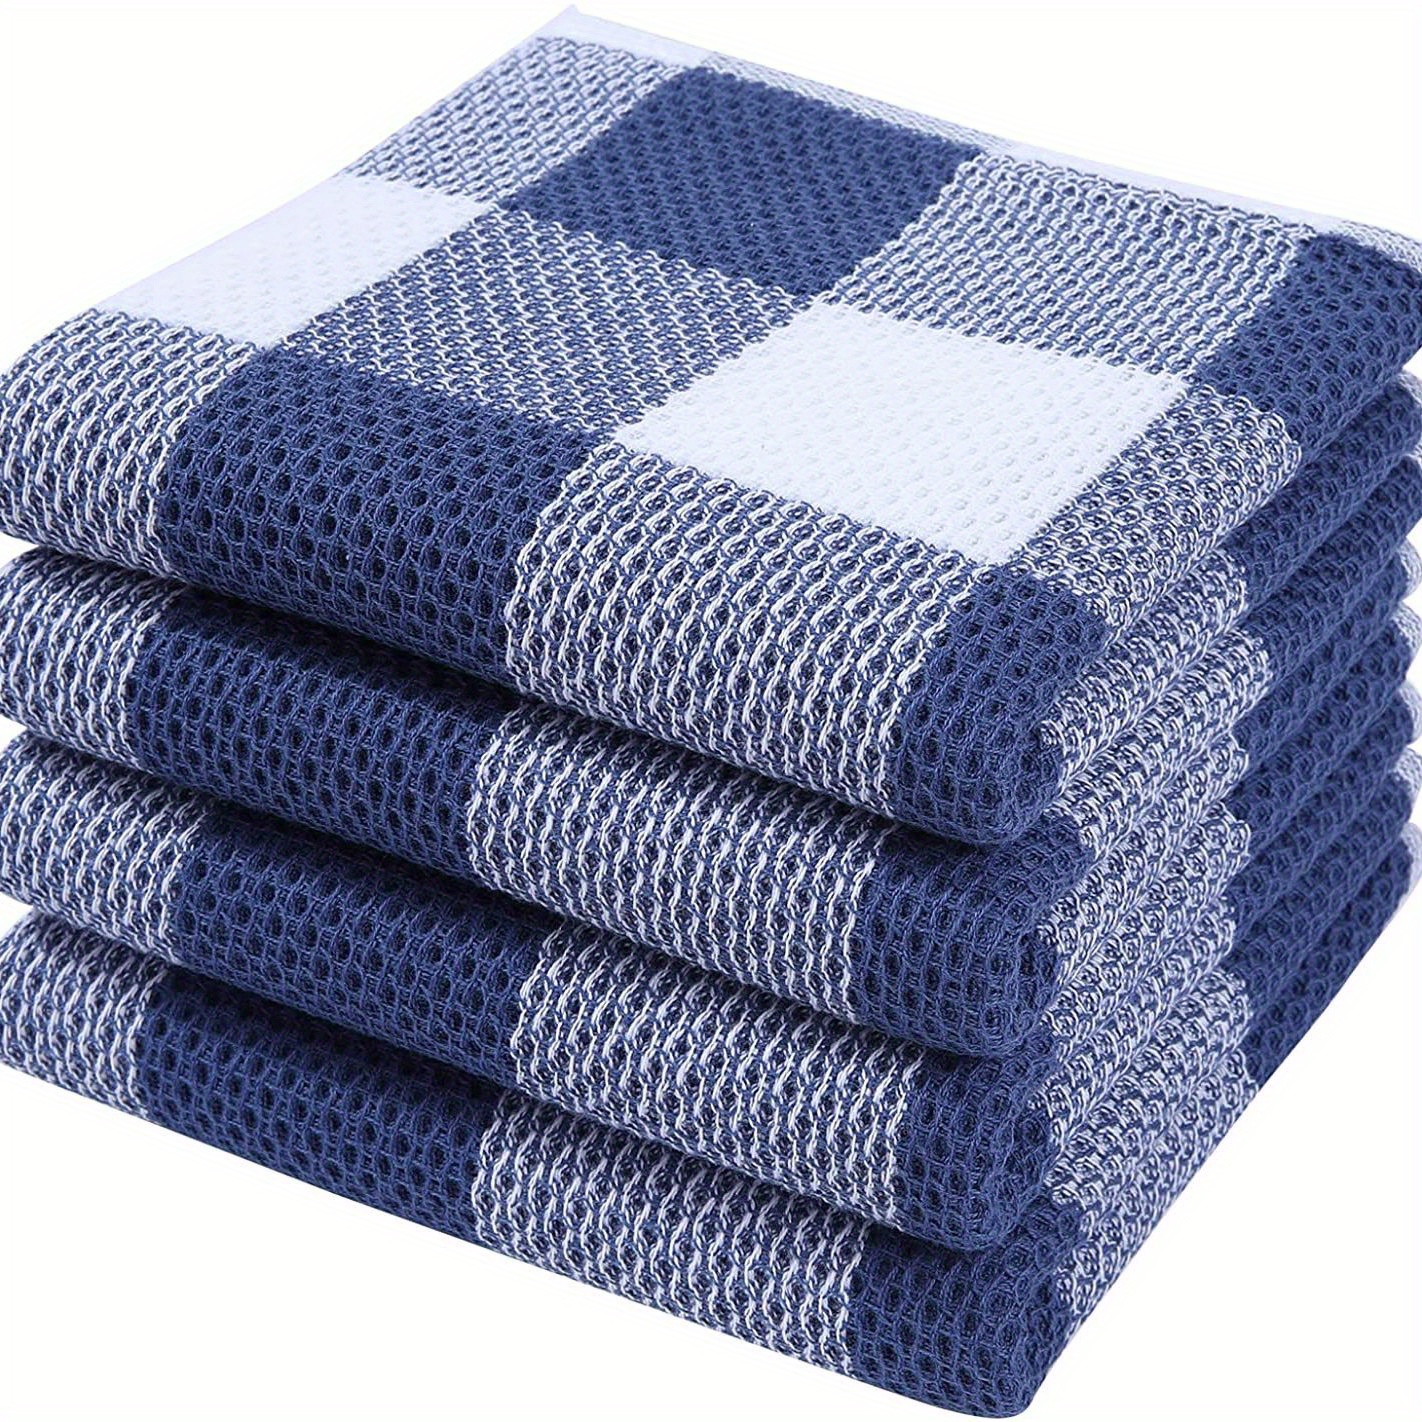 100% Cotton Waffle Weave Check Plaid Kitchen Towels, 12 x 12